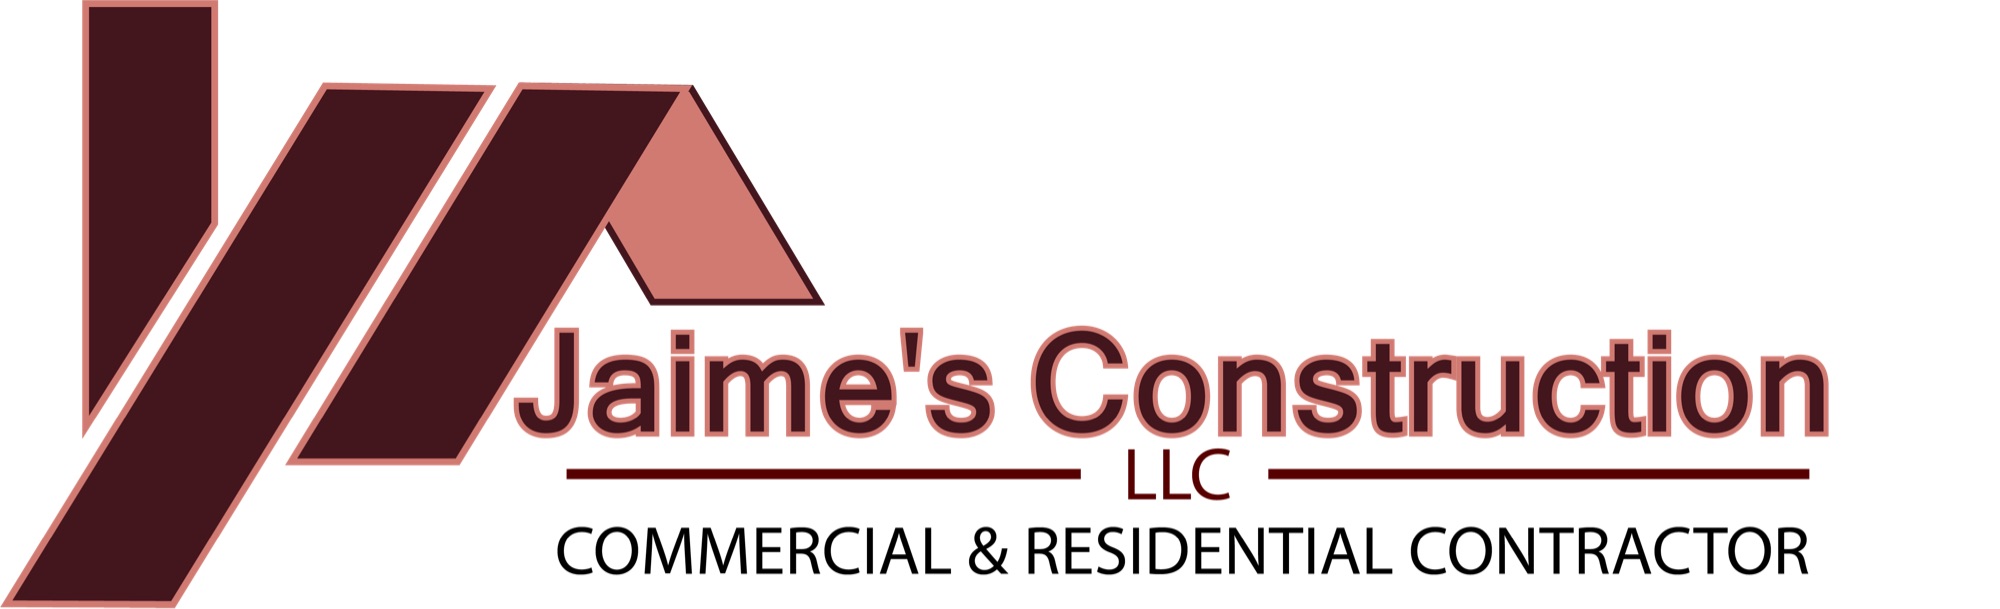 Jaime's Construction Logo